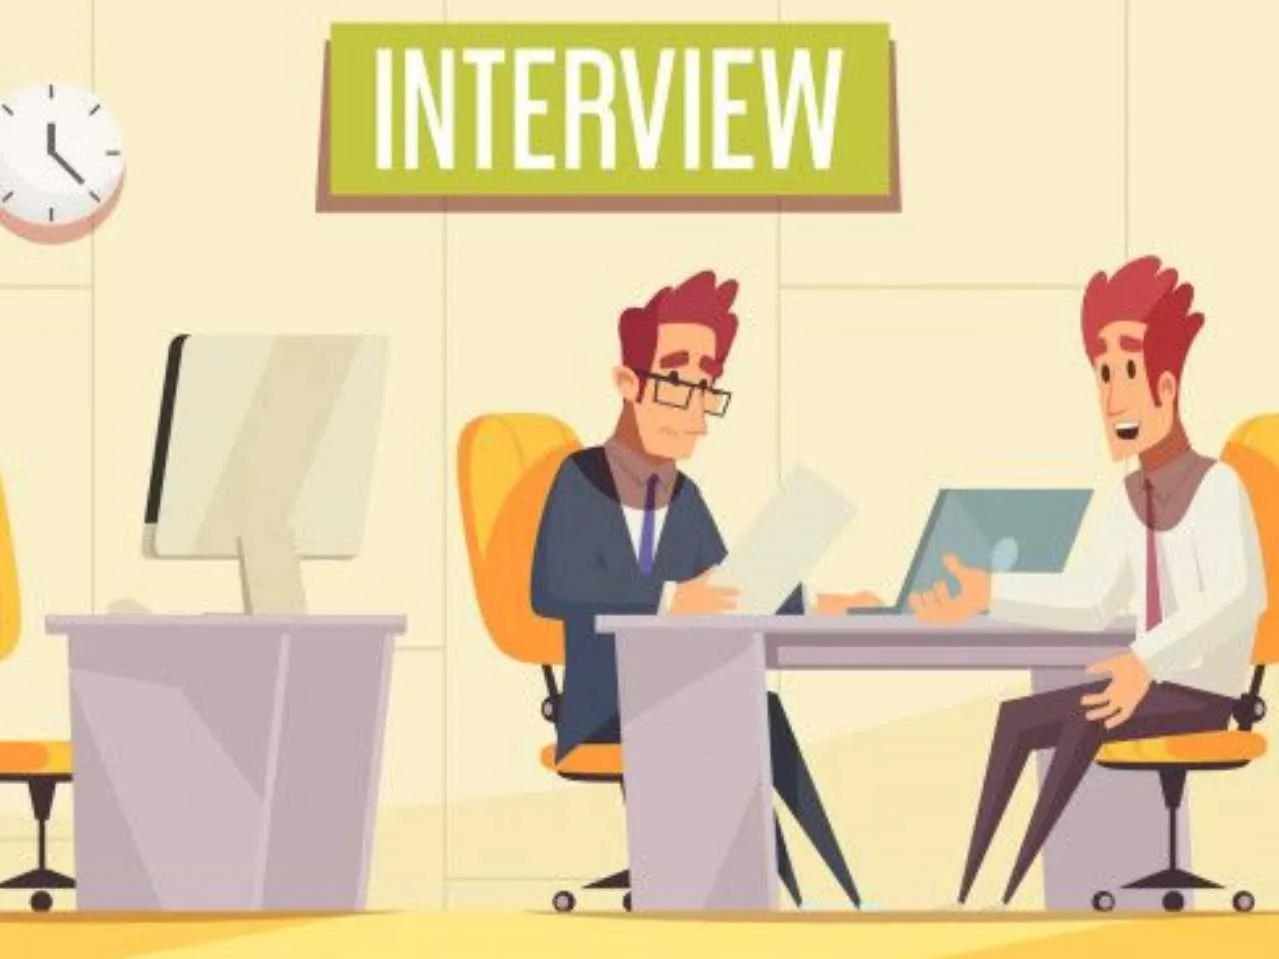 Interview room cartoon image